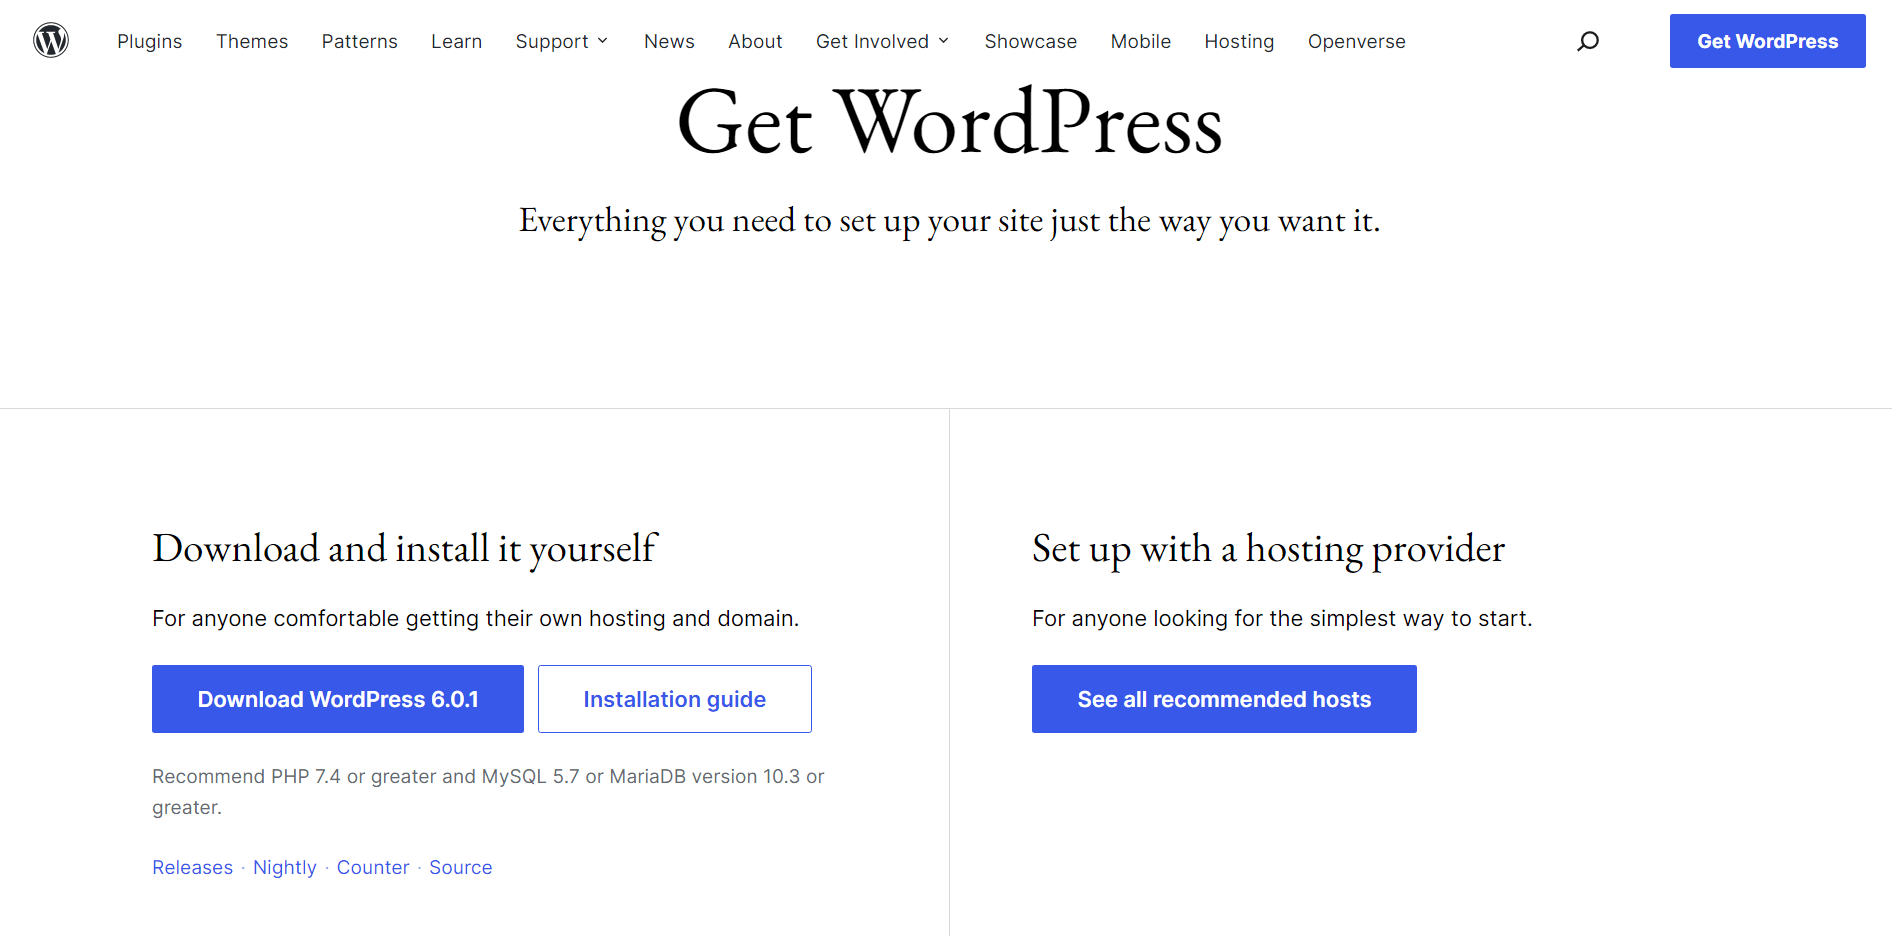 Snapshot of the “Get WordPress” page